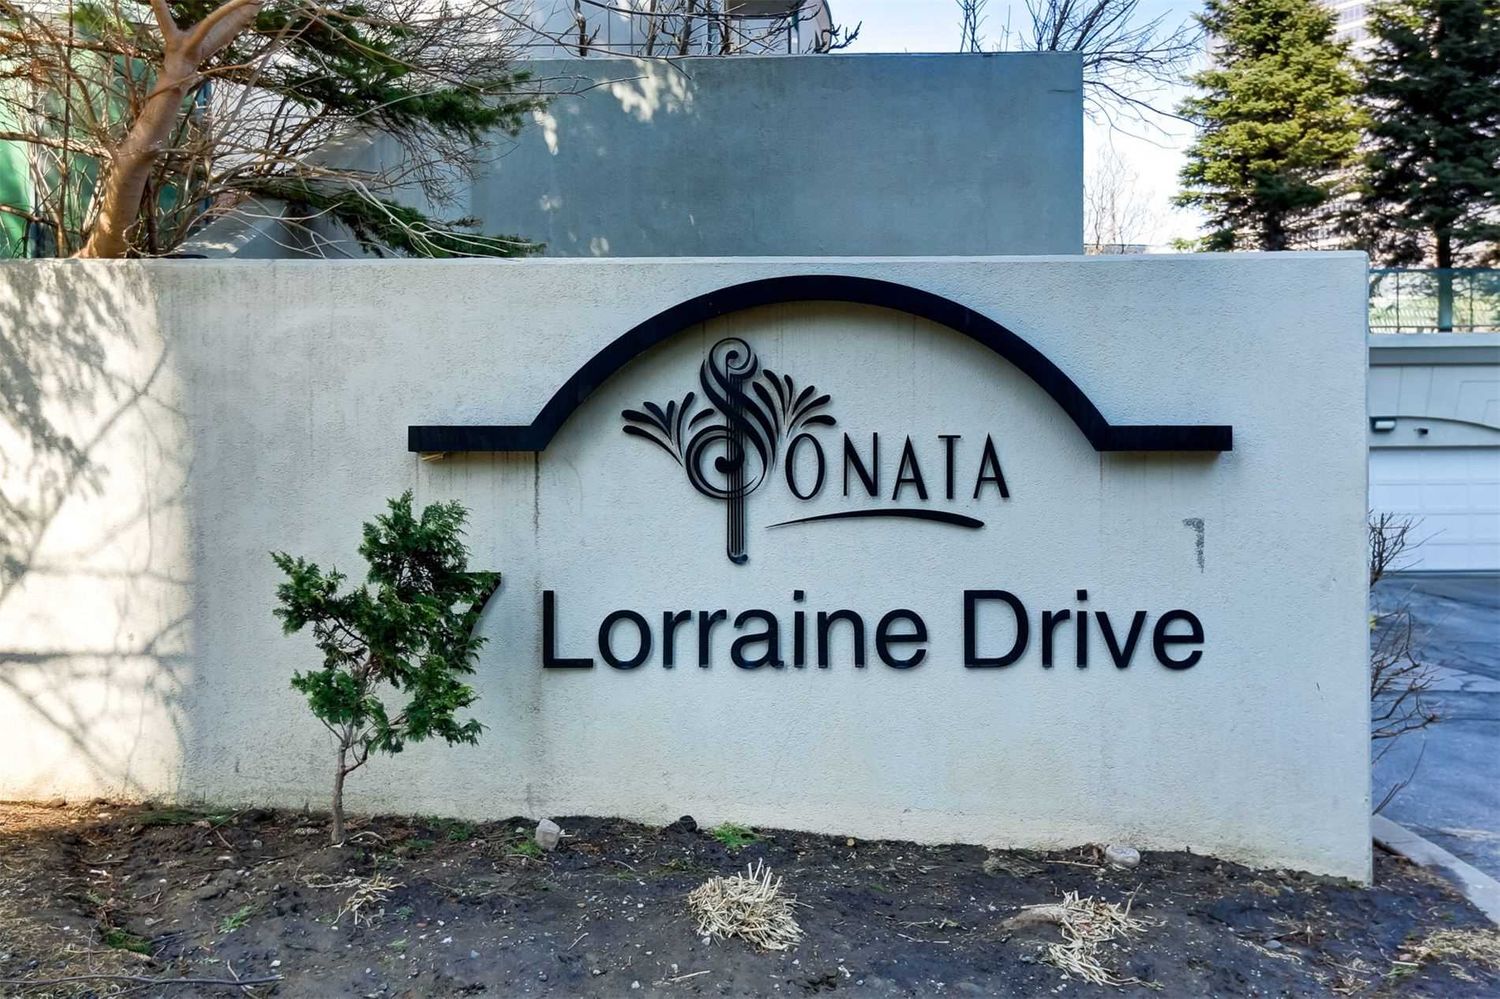 7 Lorraine Drive. Sonata Condos is located in  North York, Toronto - image #4 of 4